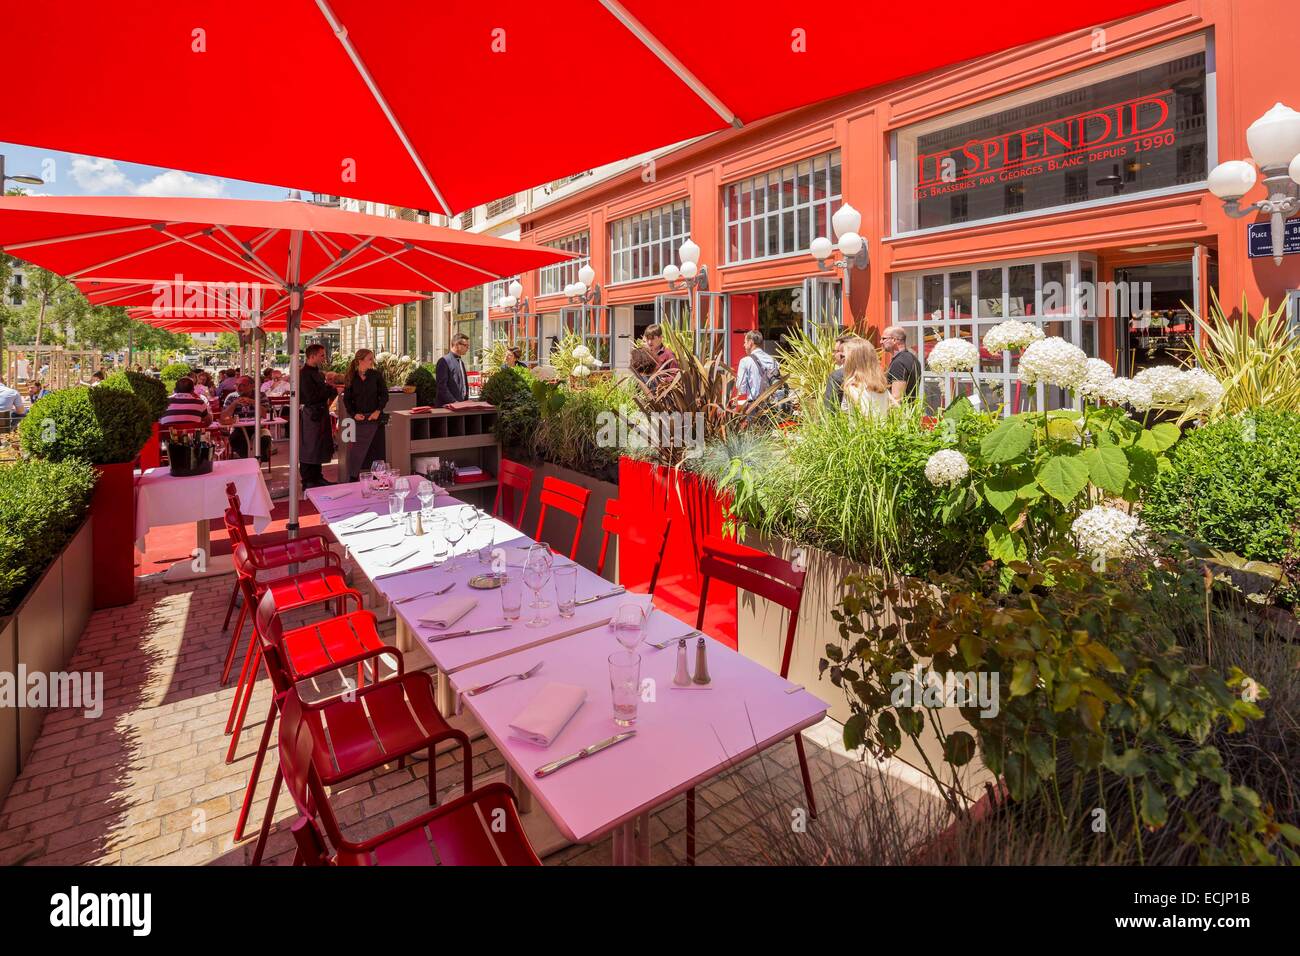 France, Rhone, Lyon, Brasserie Le Splendid, Jules Ferry square Stock Photo